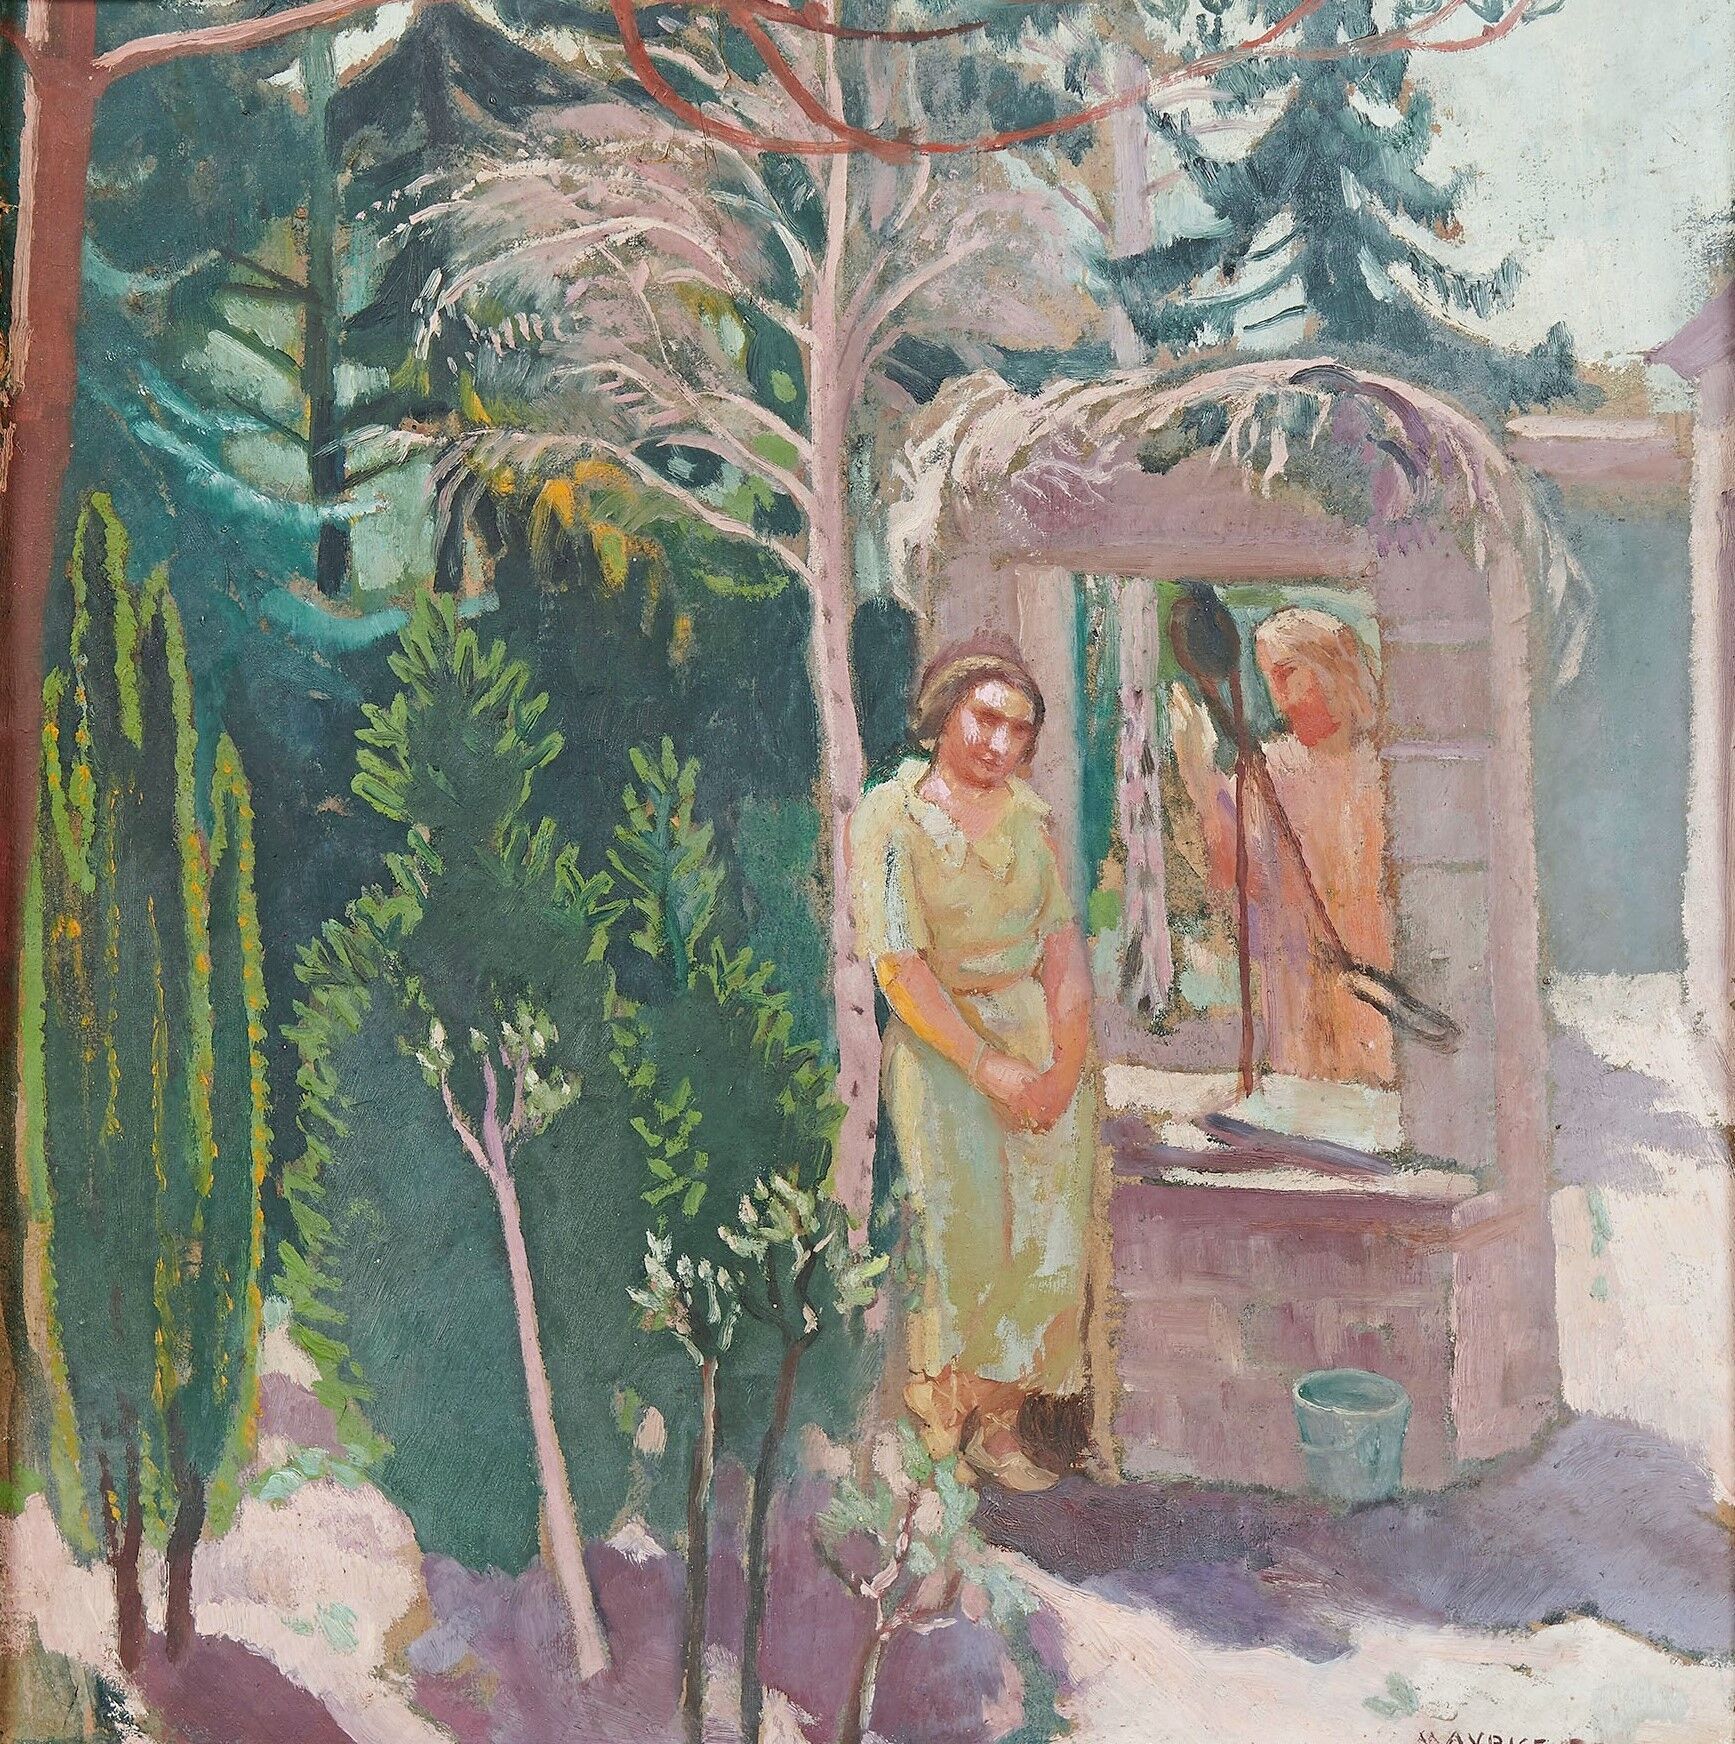 Null 莫里斯-丹尼斯 (1870-1943)

撒玛利亚女人》，1924年

板上油画，右下角有签名和日期 "24"。

40.5 x 39.5 厘米

出&hellip;